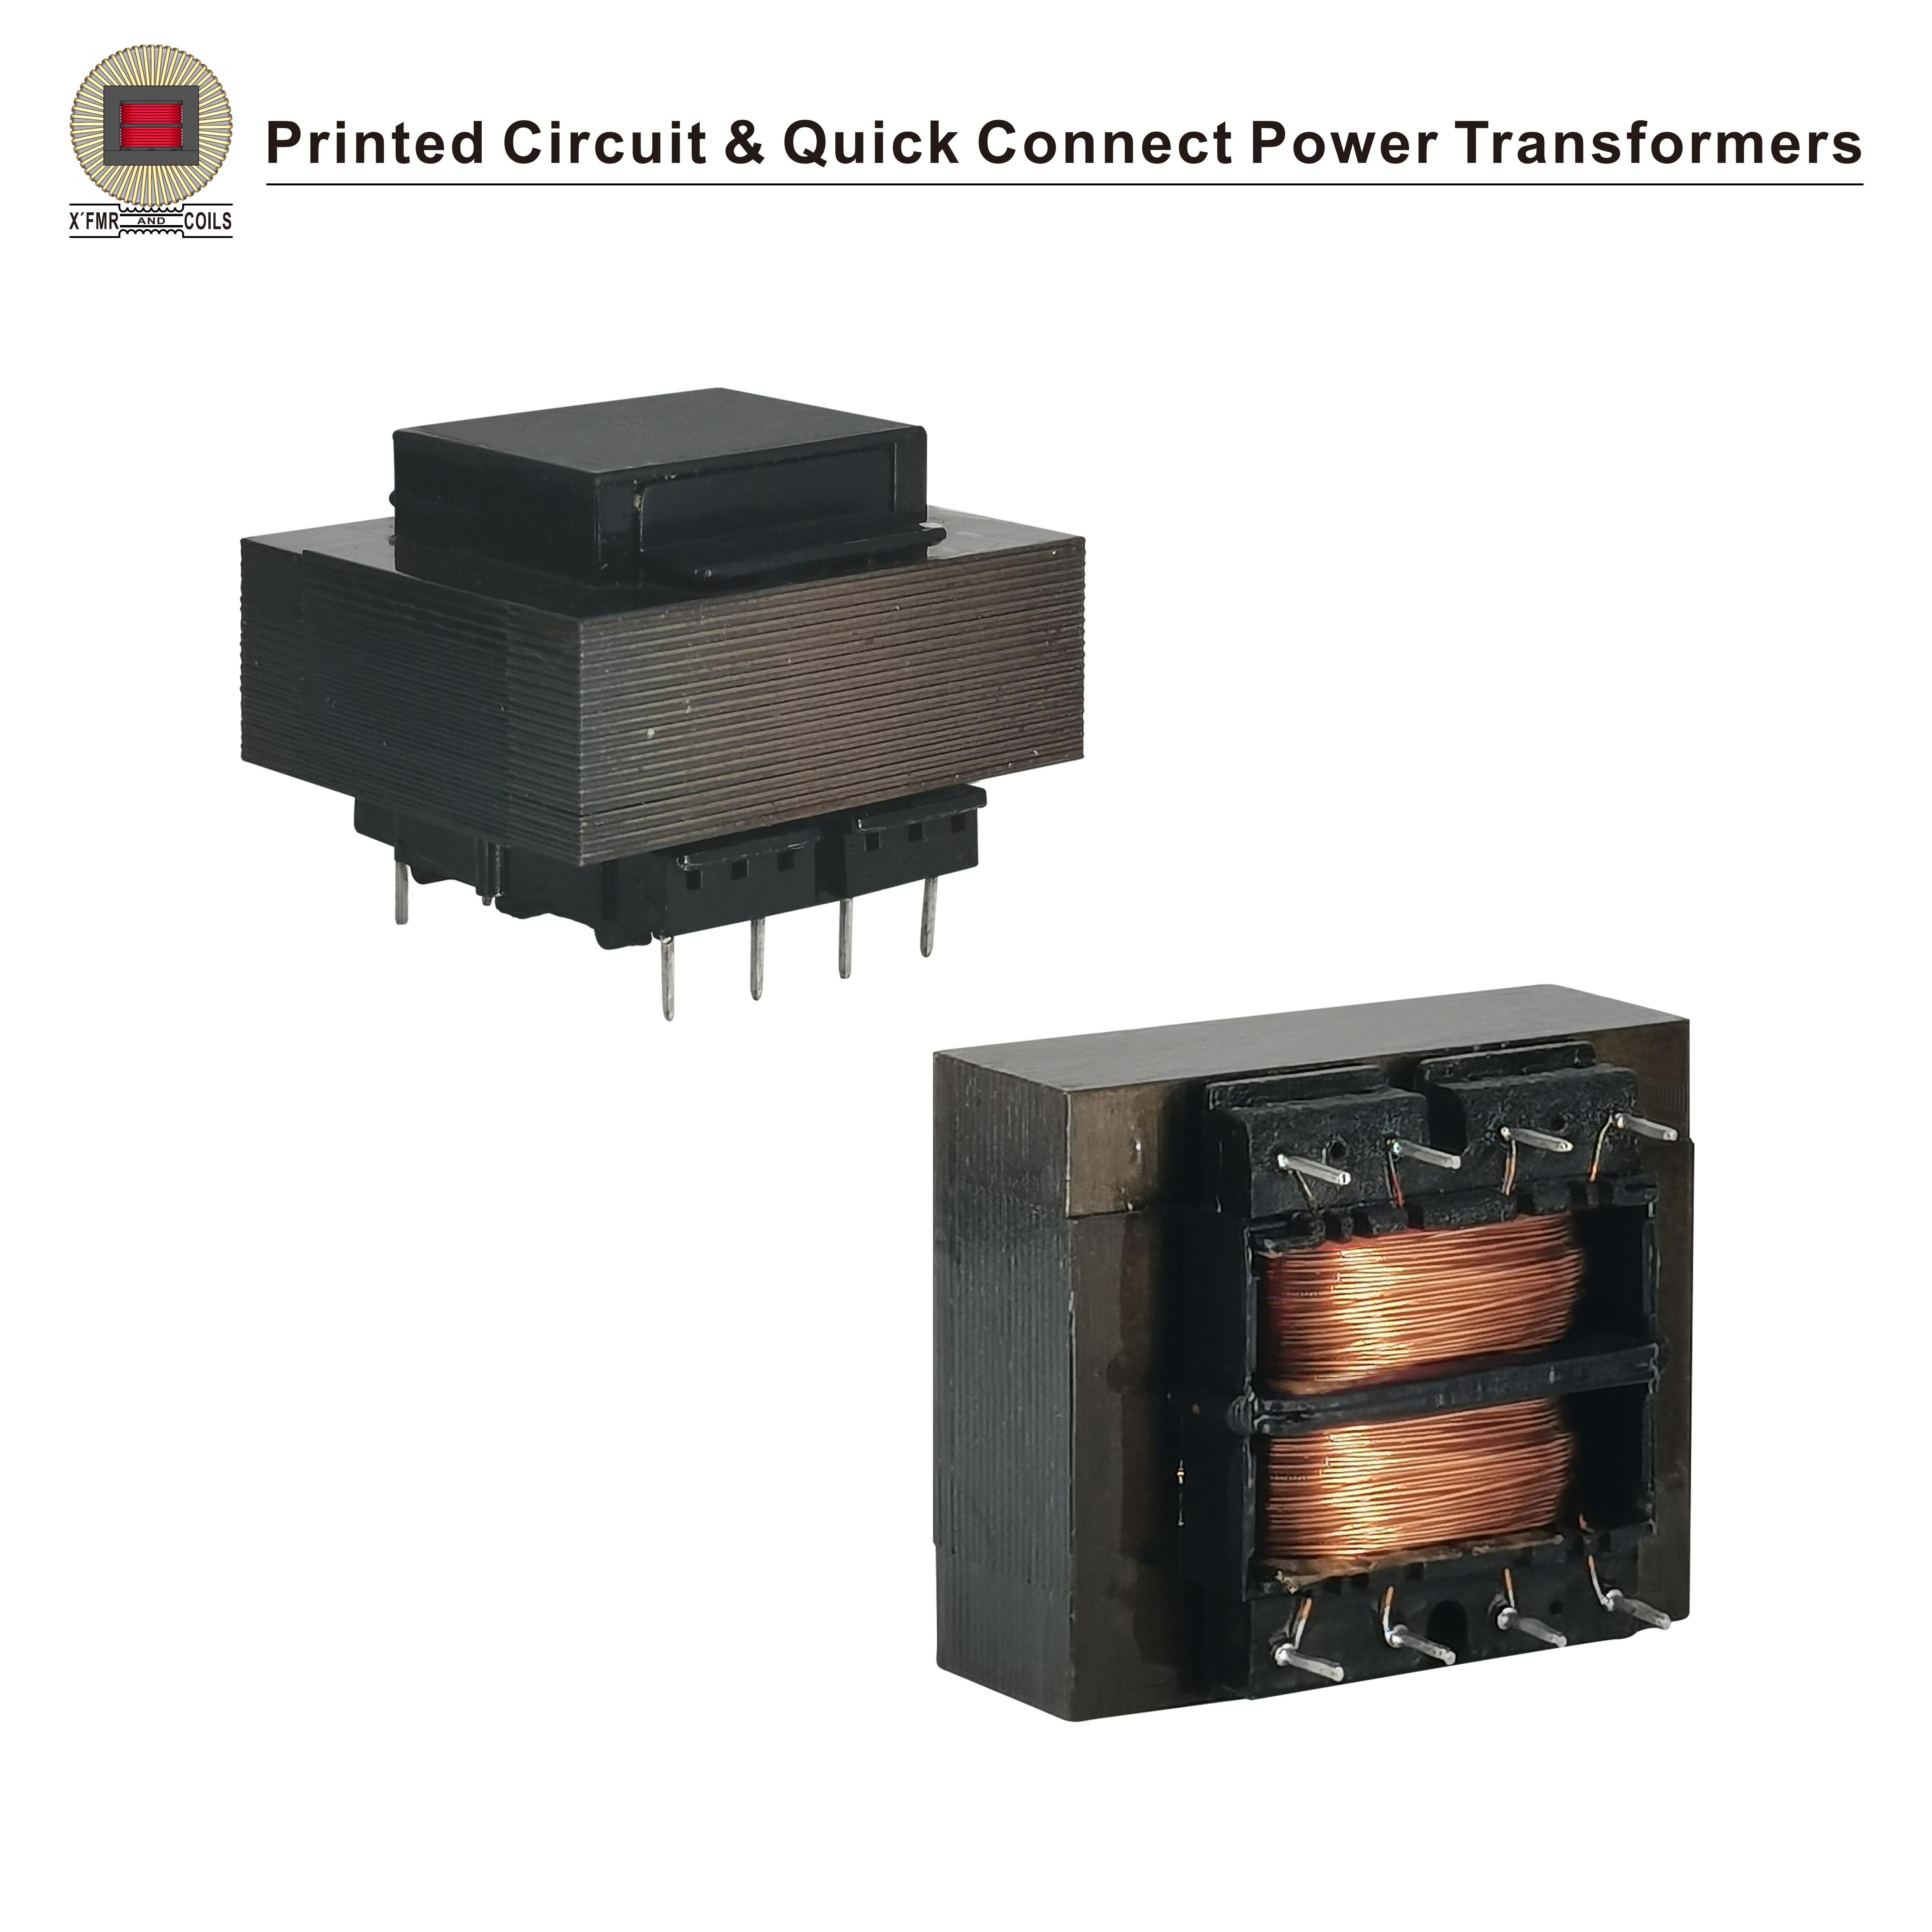 Printed Circuit Power Transformer PCPT-03 Series